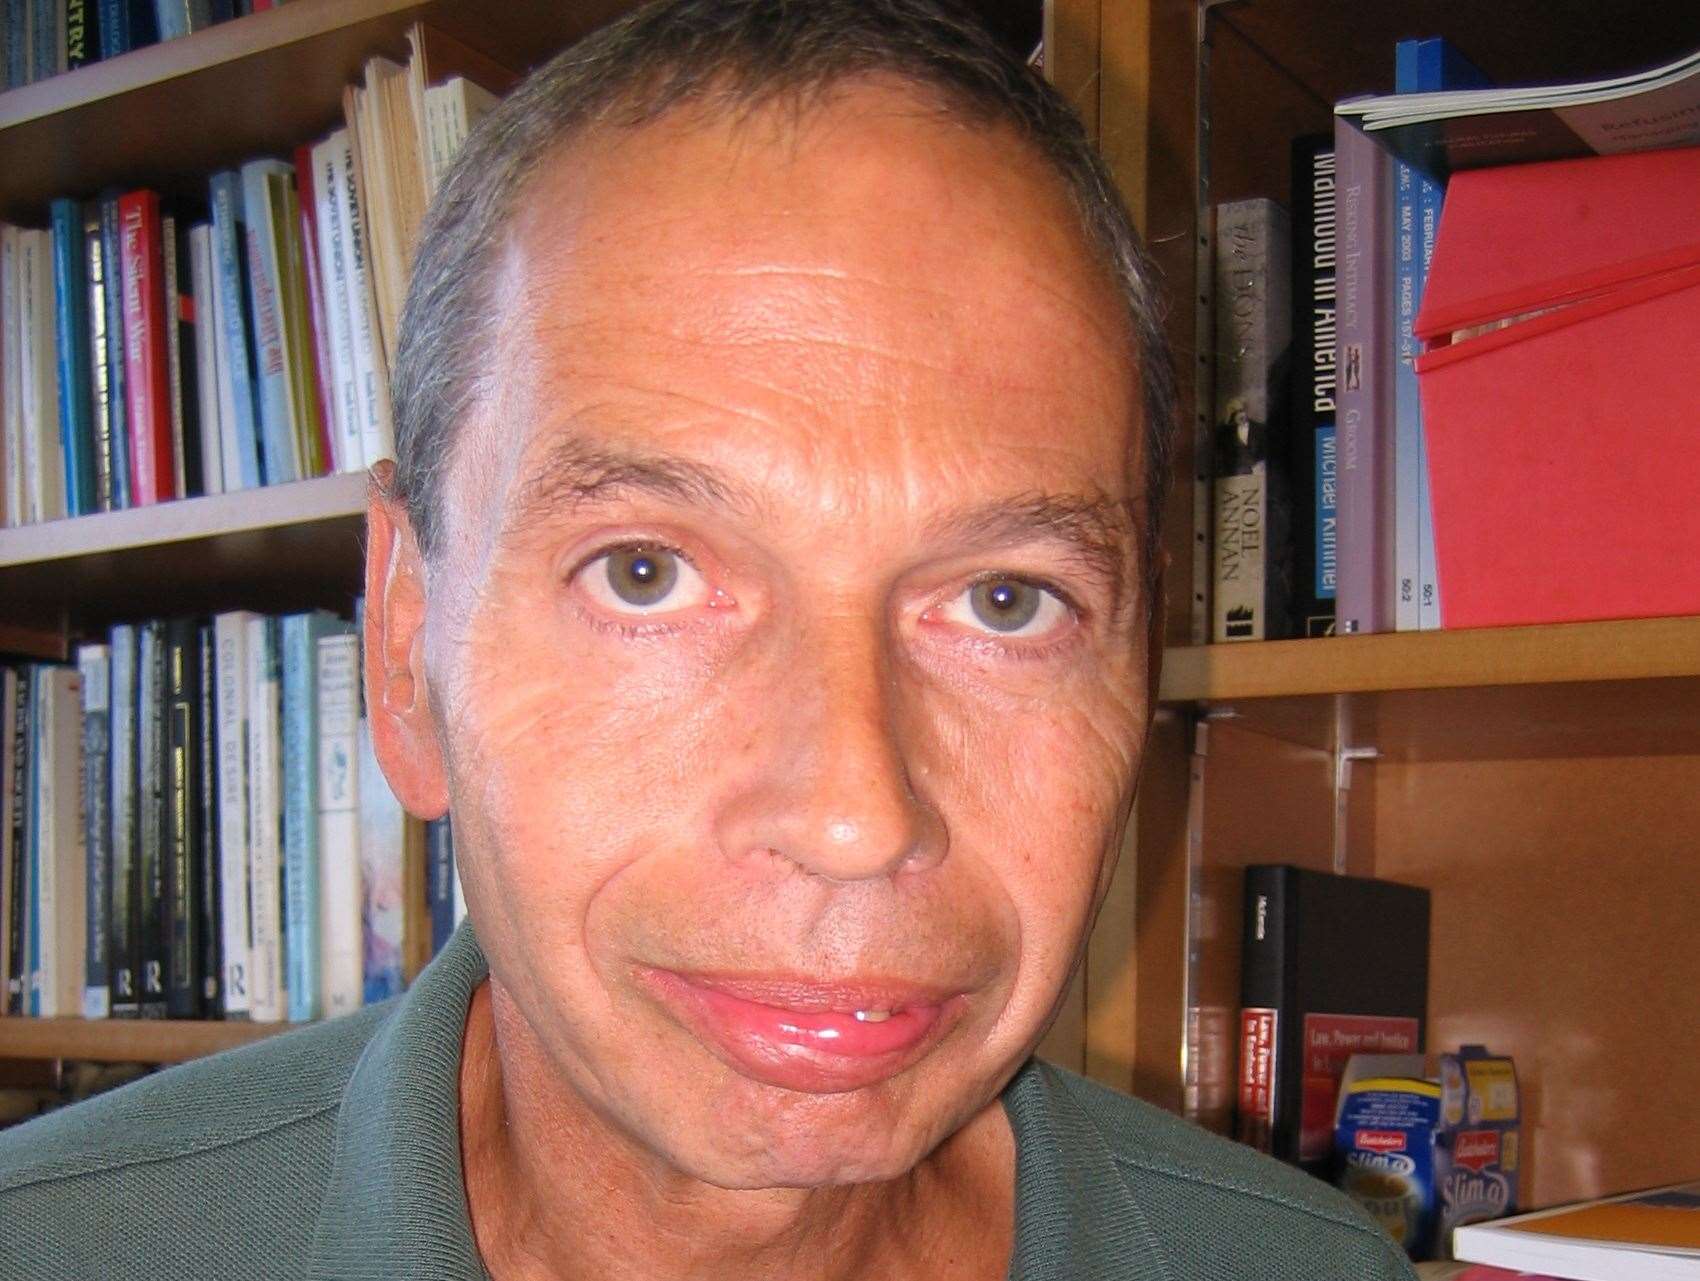 UKC sociologist Prof Frank Furedi